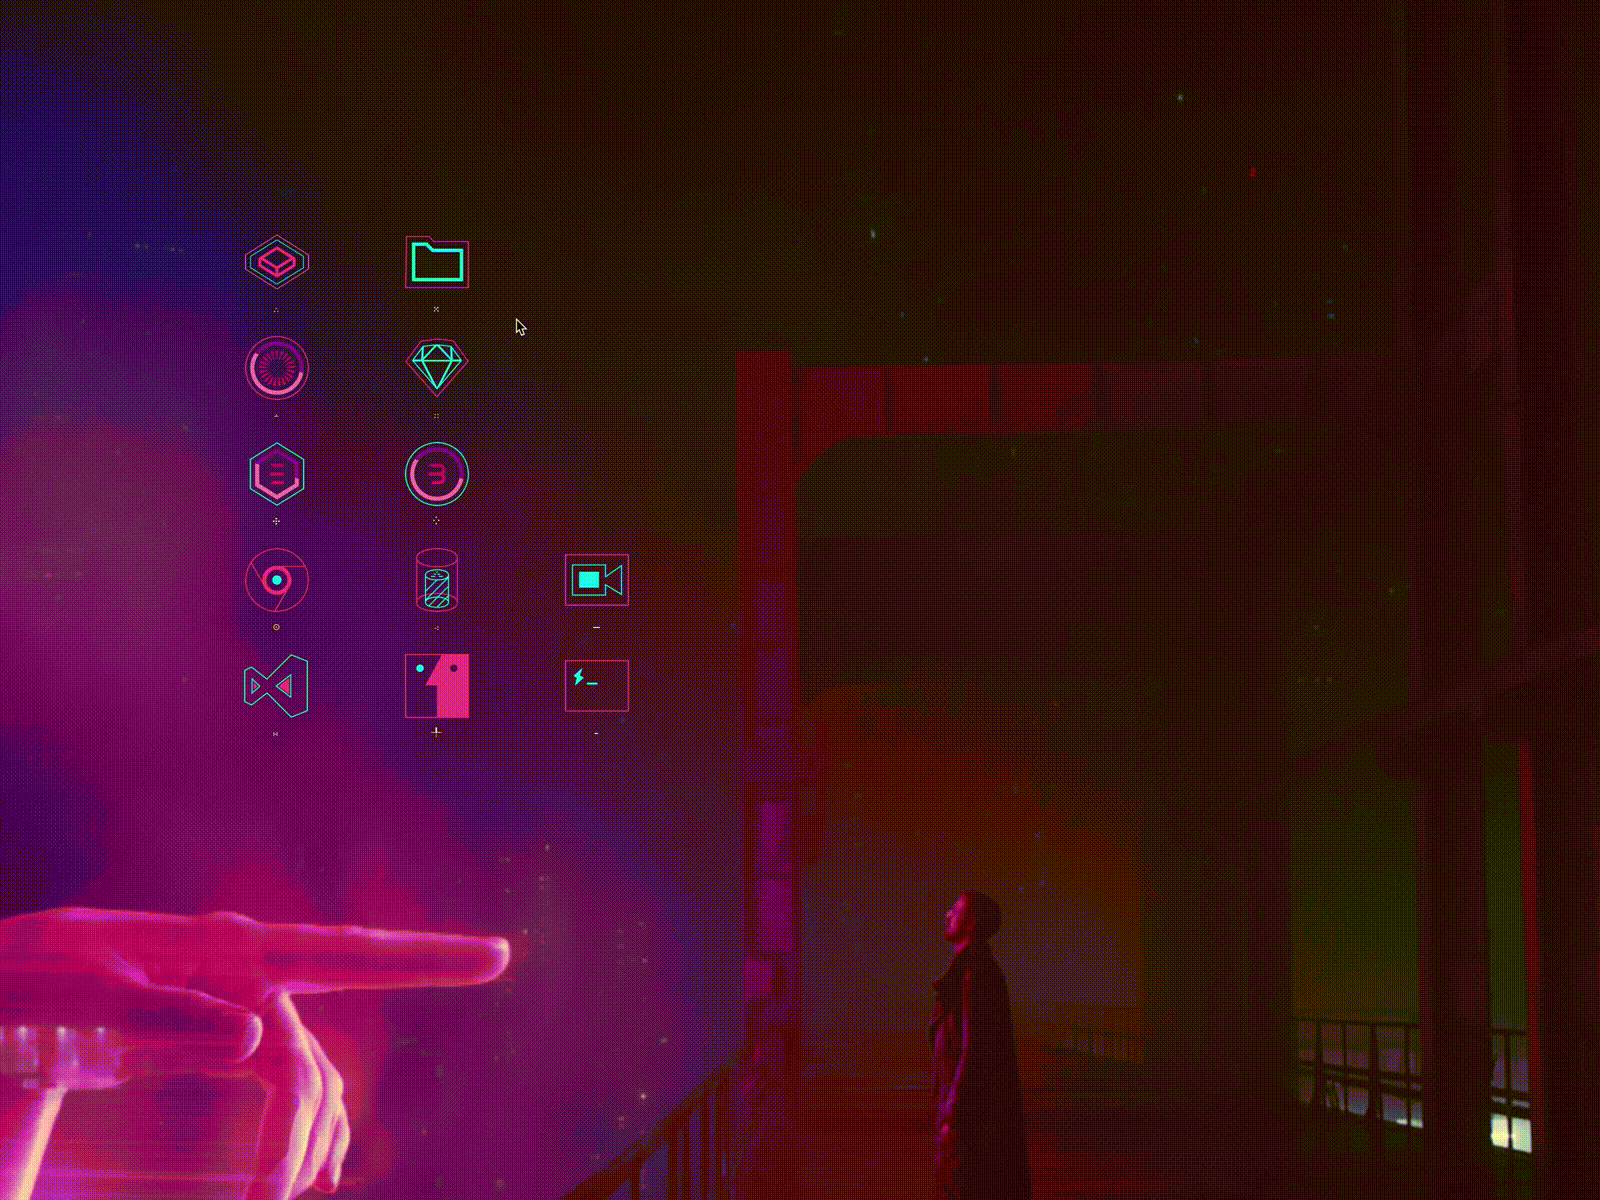 Blade Runner 2049 icon set blade runner 2049 bladerunner desktop futuristic icon set icons ui